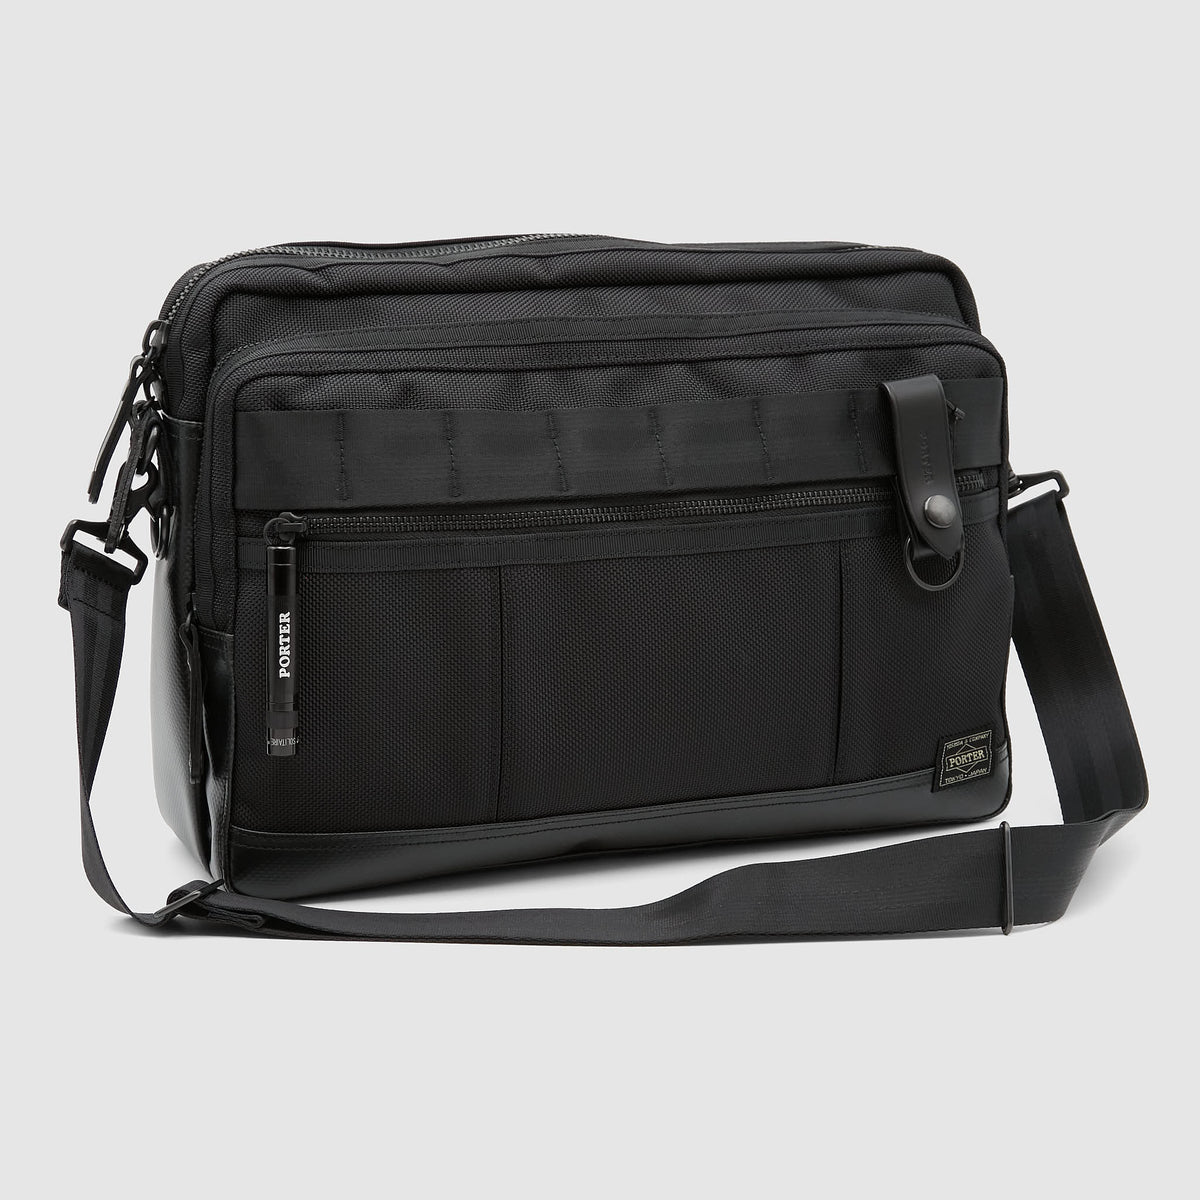 Porter Yoshida & Co. Heat Medium Shoulder Bag - DeeCee style